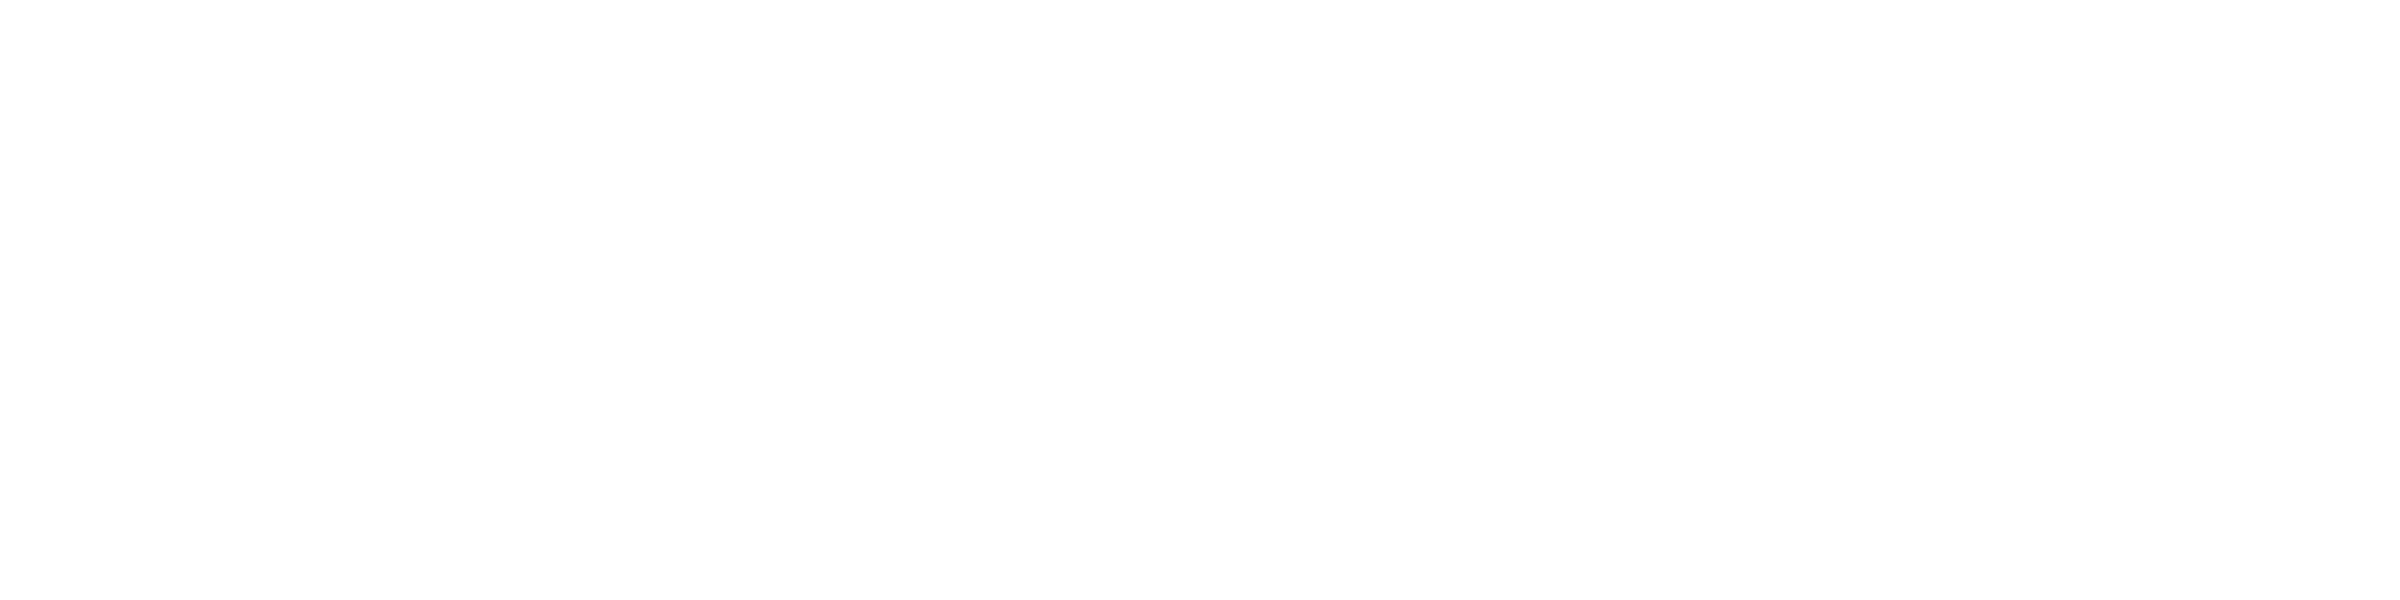 Sew Nice Customs